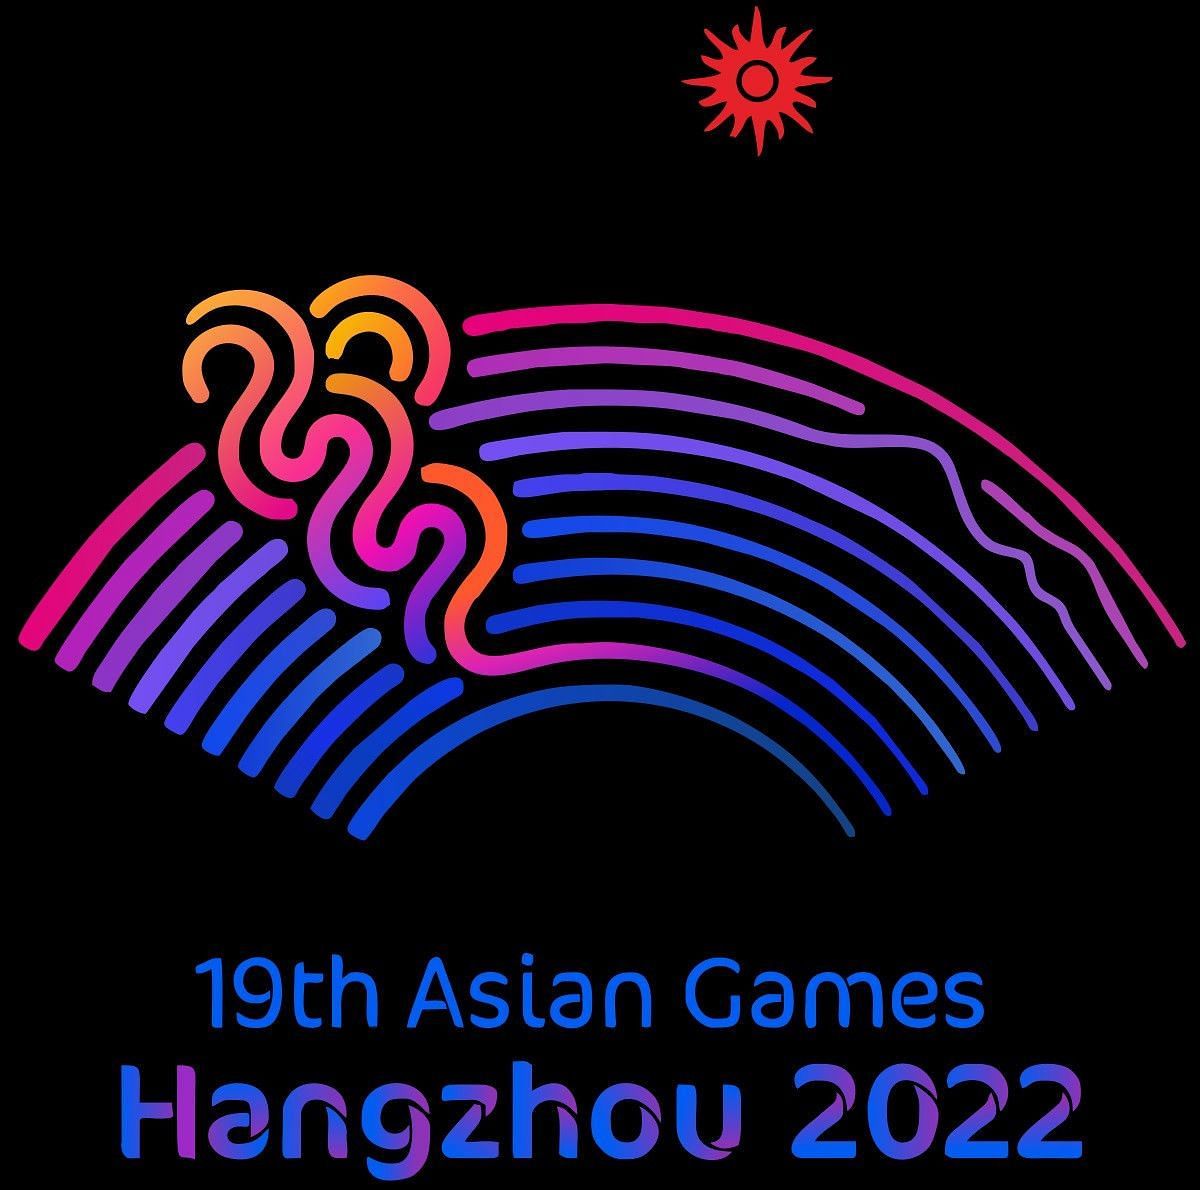 The logo of the Hangzou Asian Games 2022.